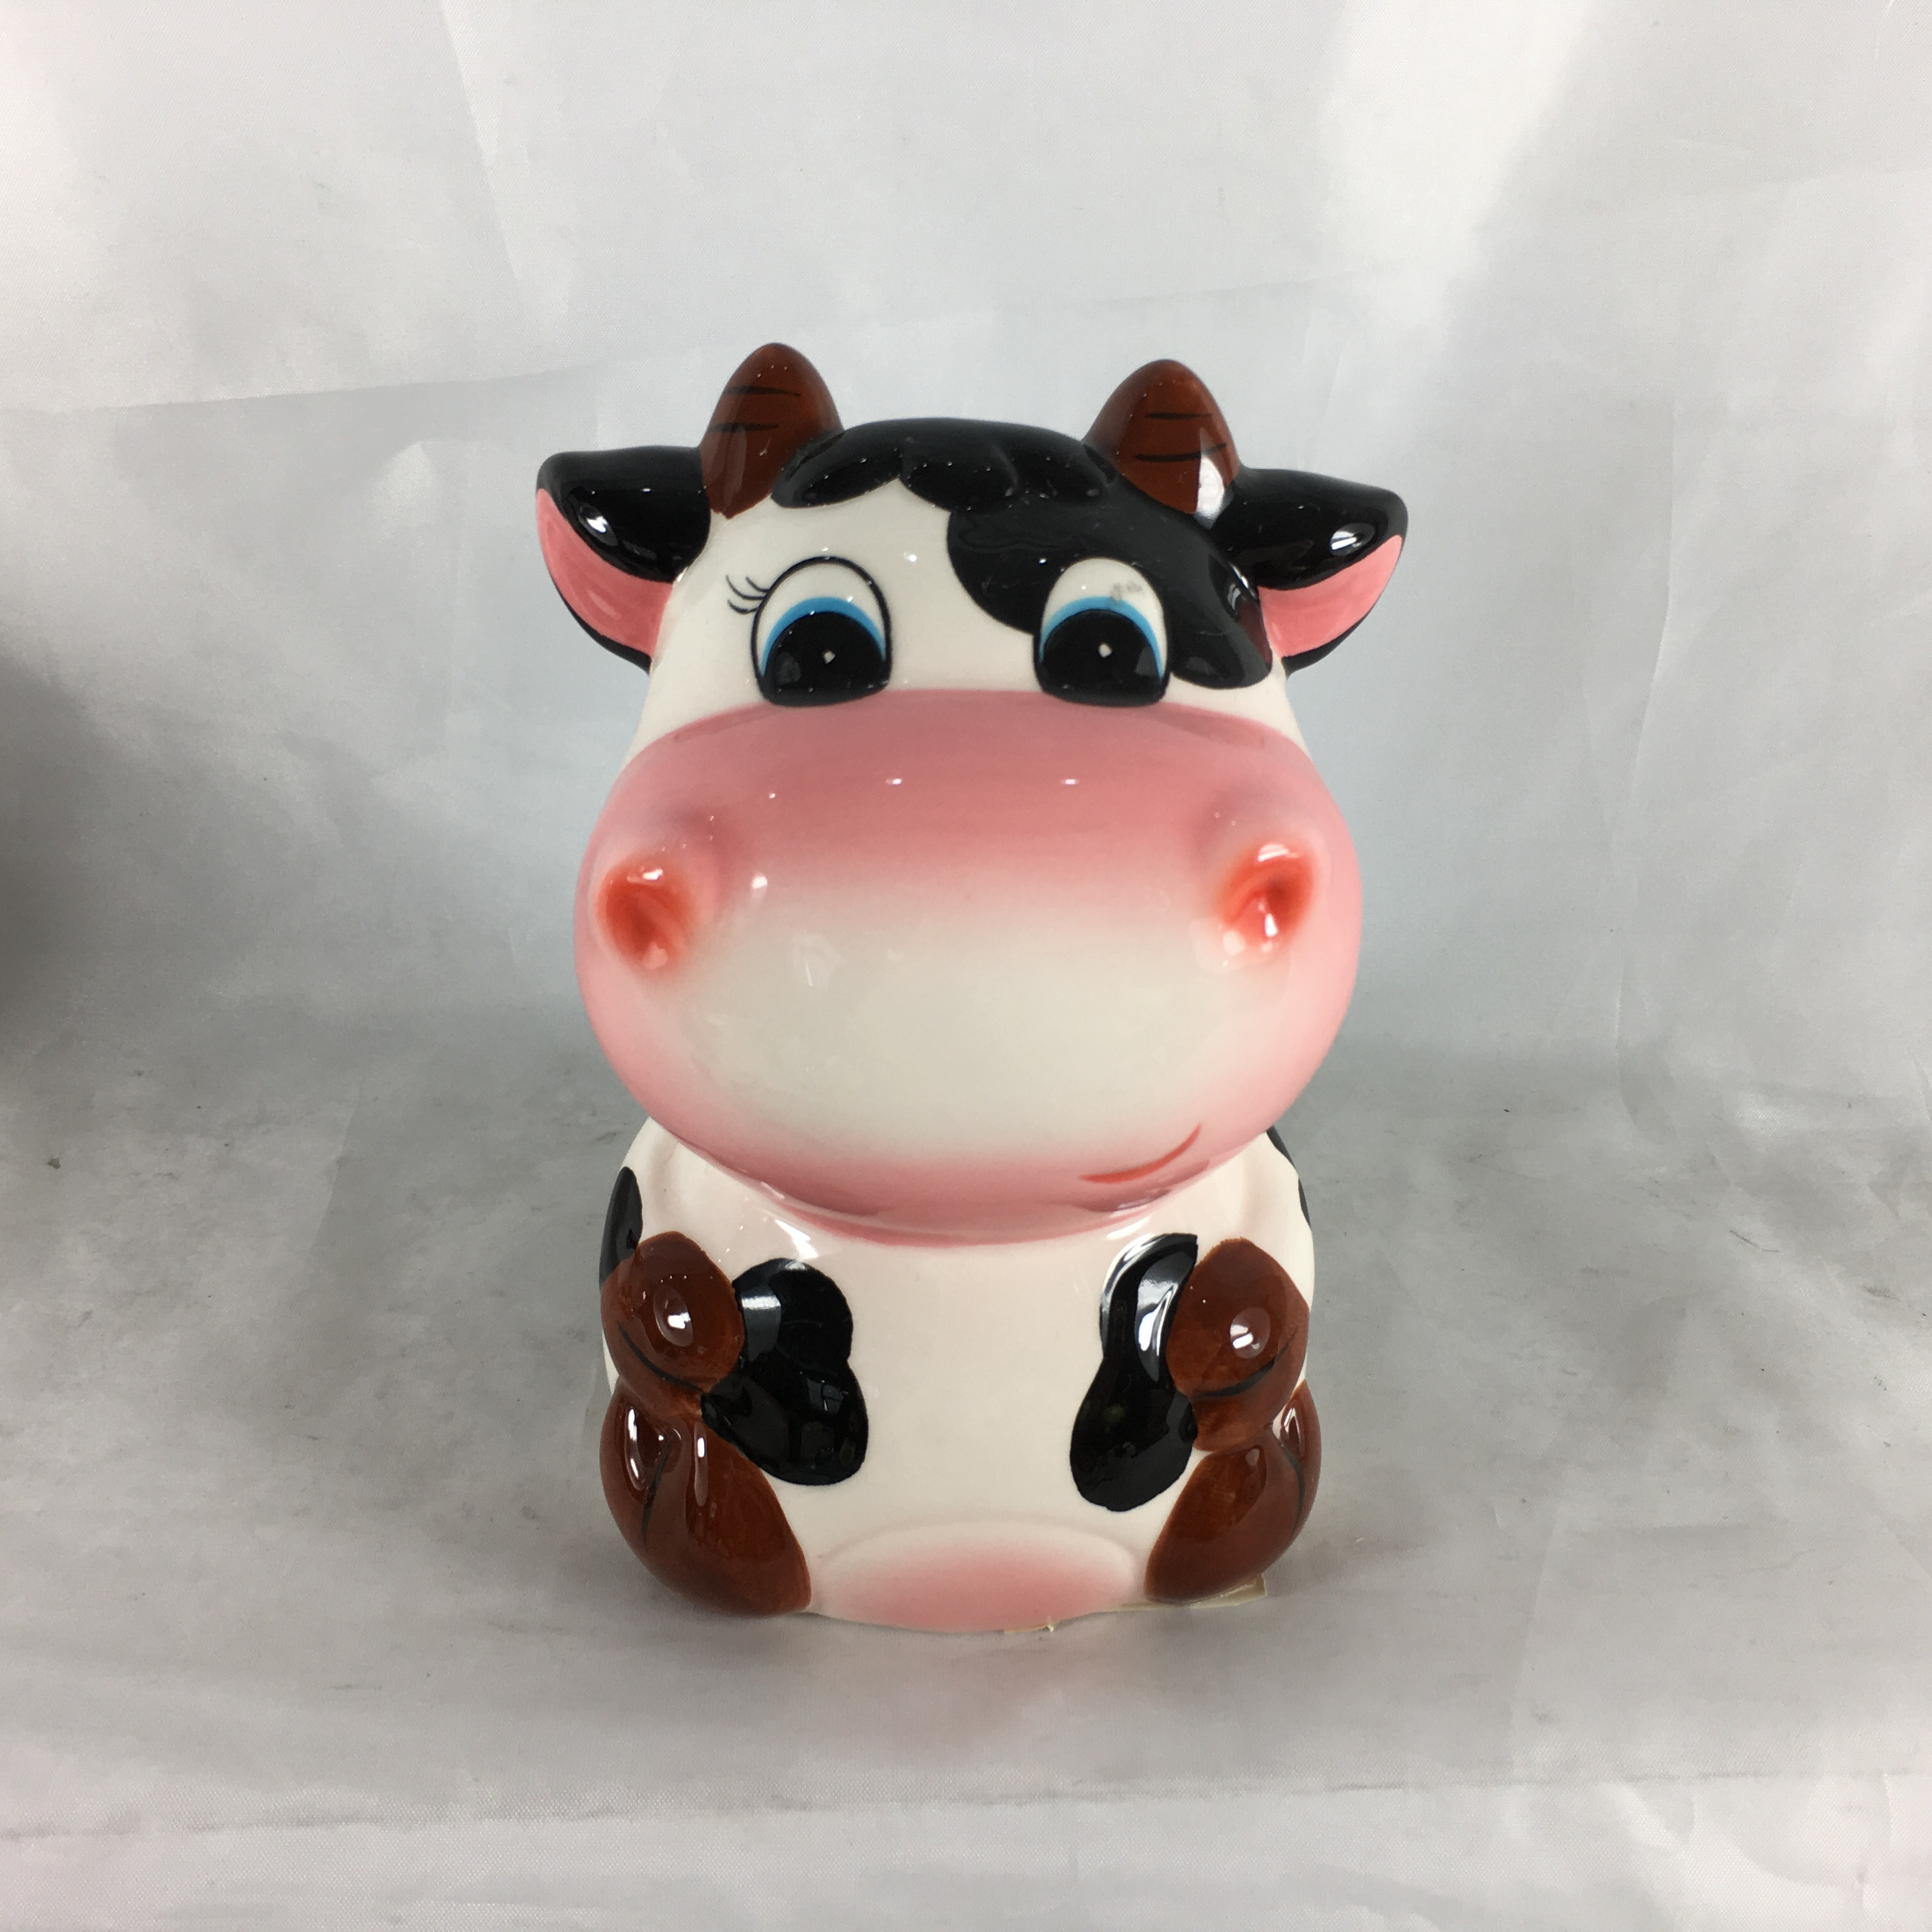 2019 Cow shape ceramic coin bank animal design money box